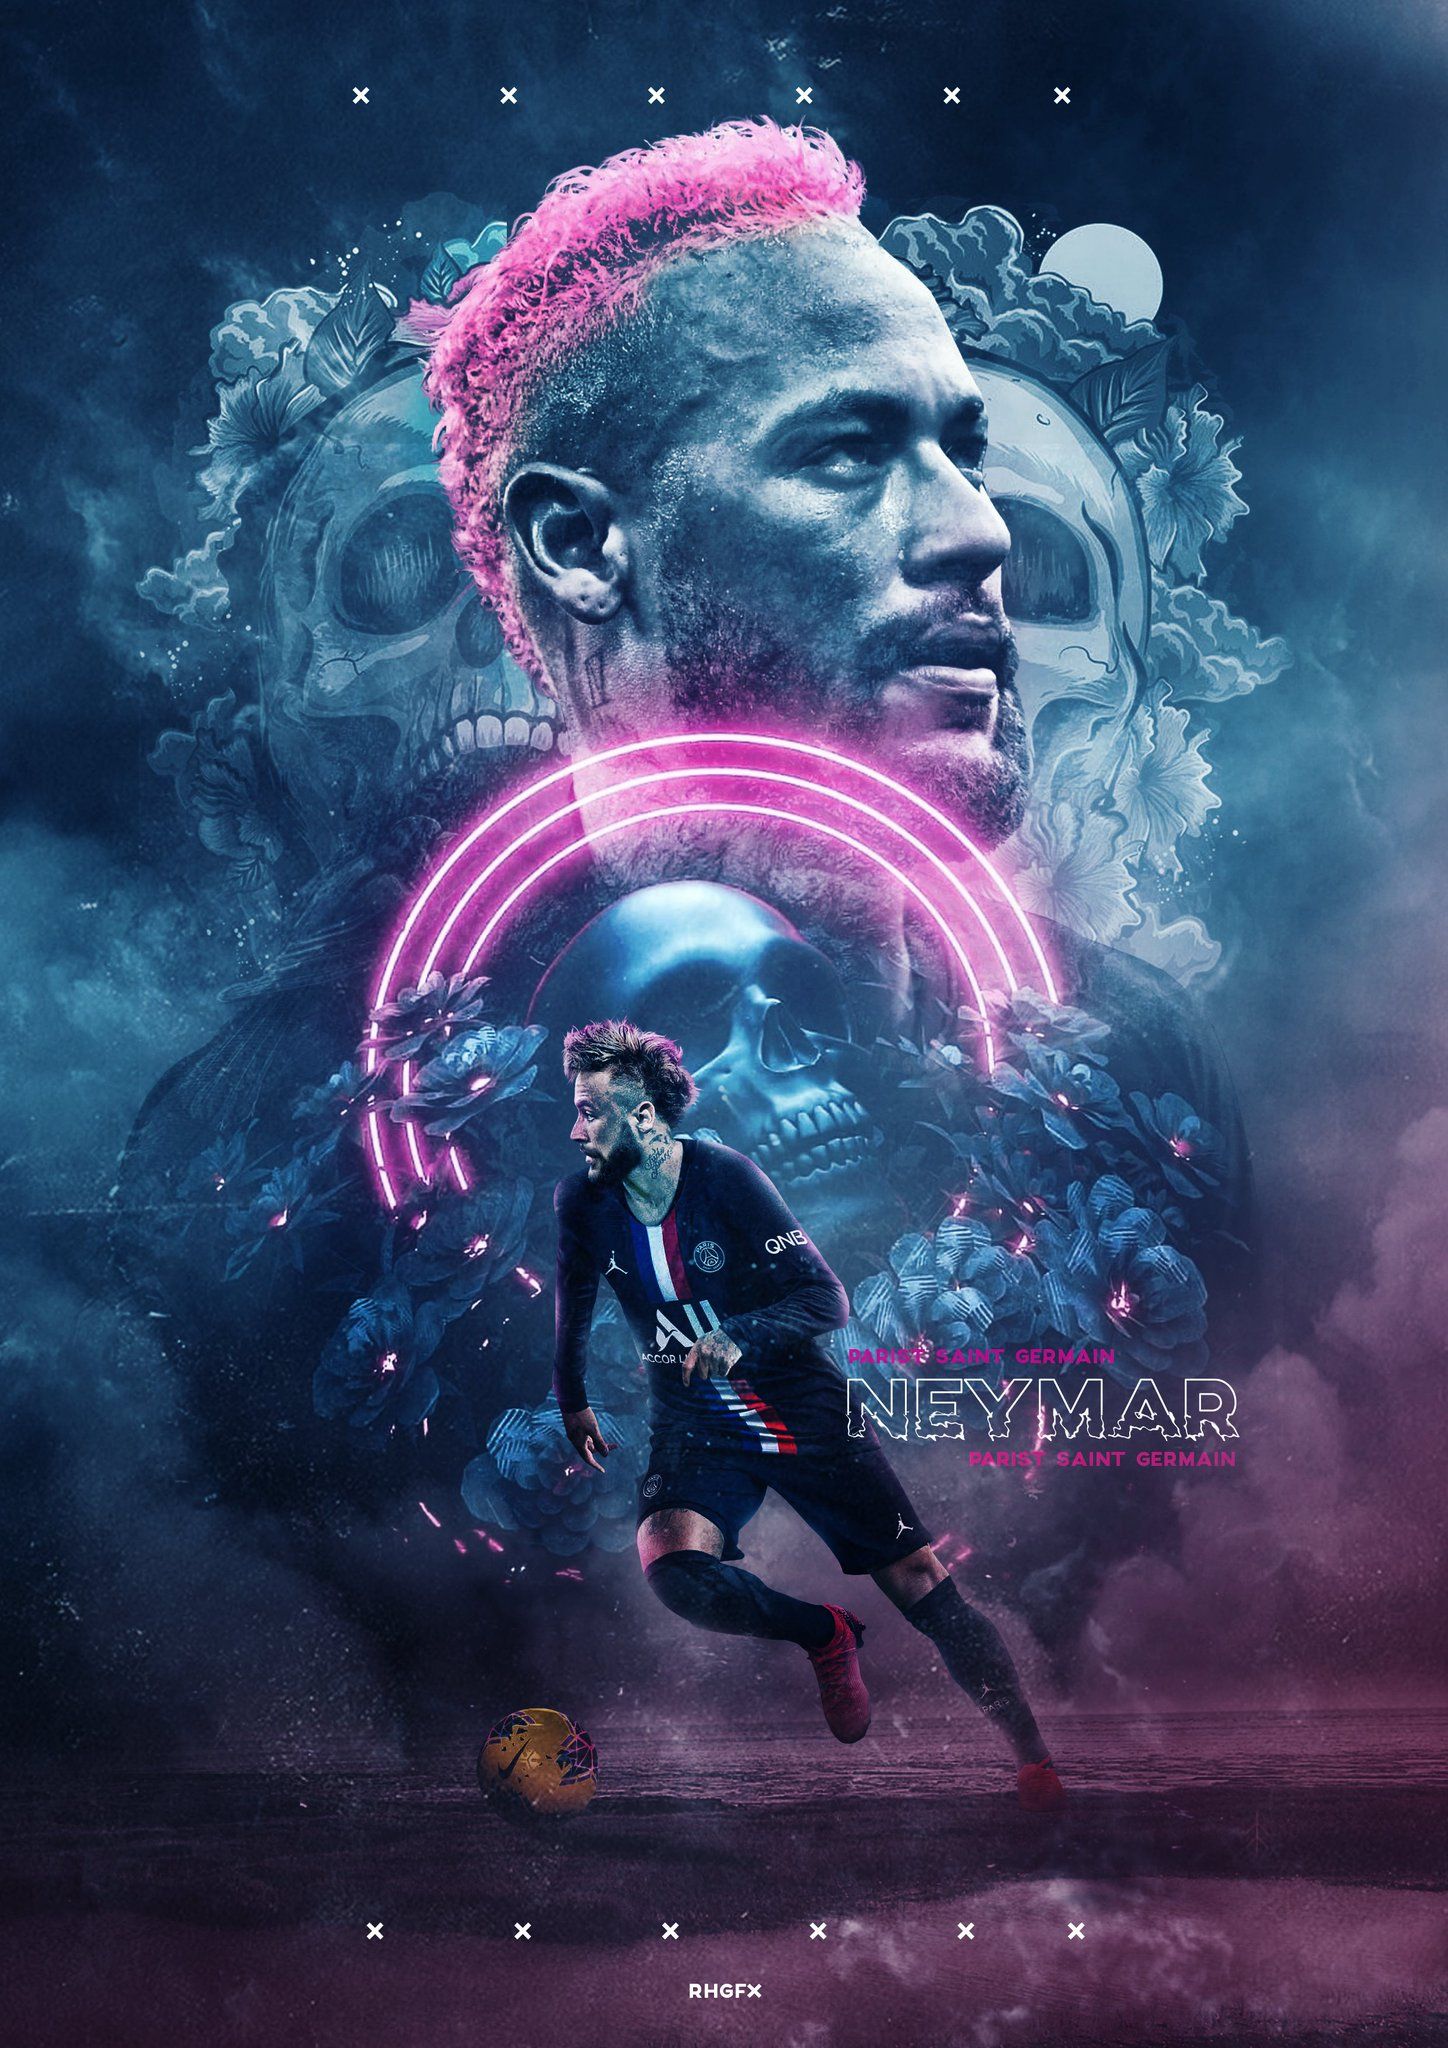 RHGFX -. Aesthetic Style Wallpaper. #psg #neymar #Neymar